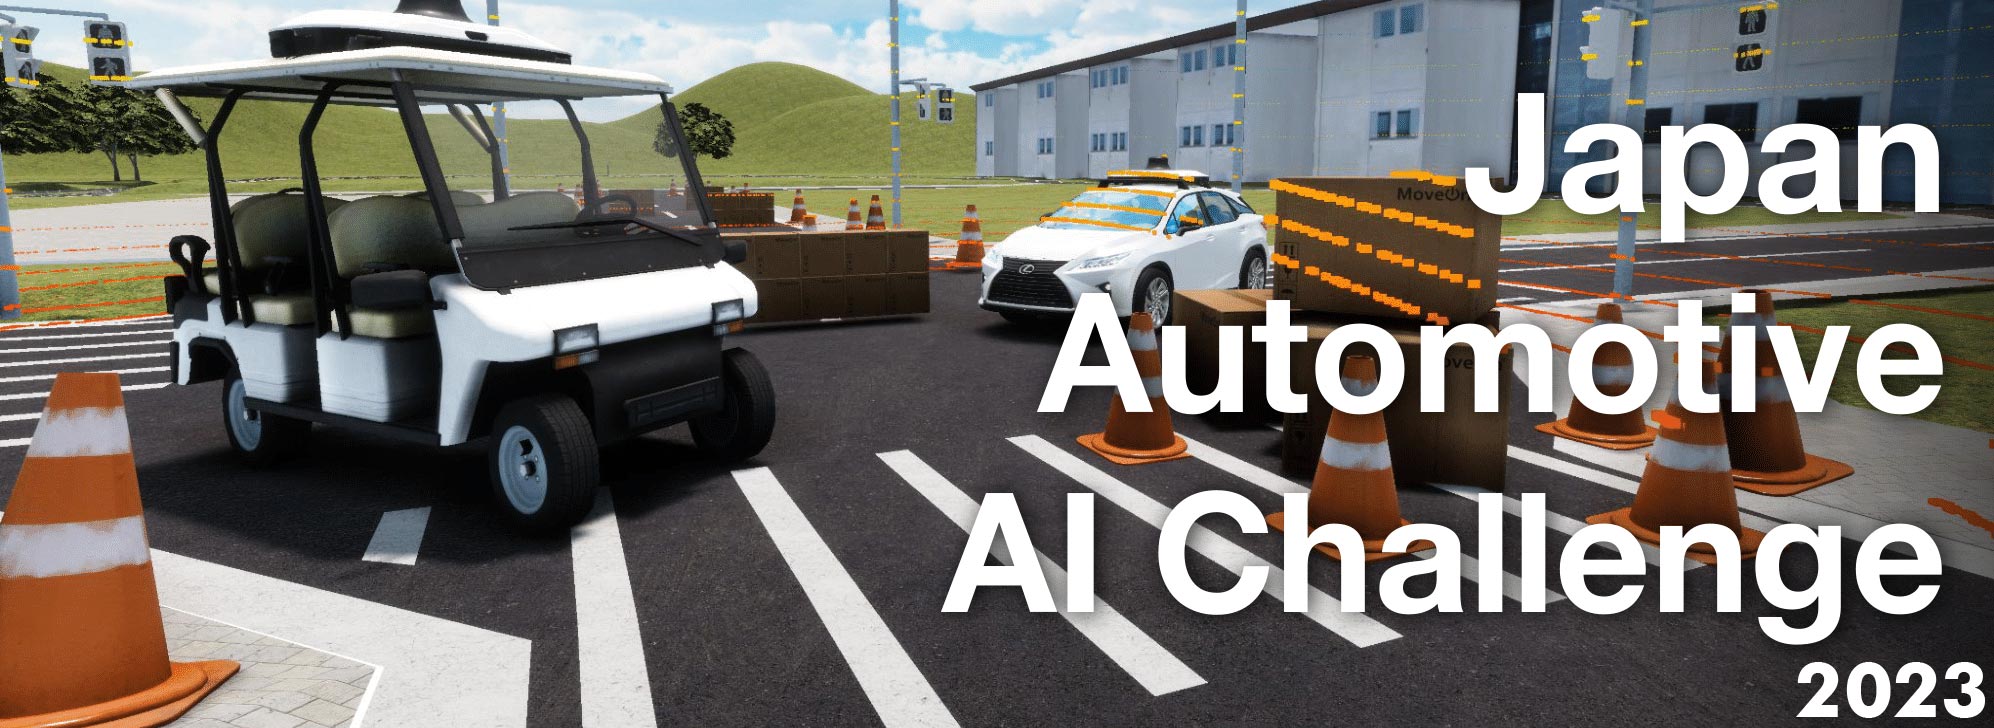 Japan Automotive AI Challenge　自動運転AIチャレンジ